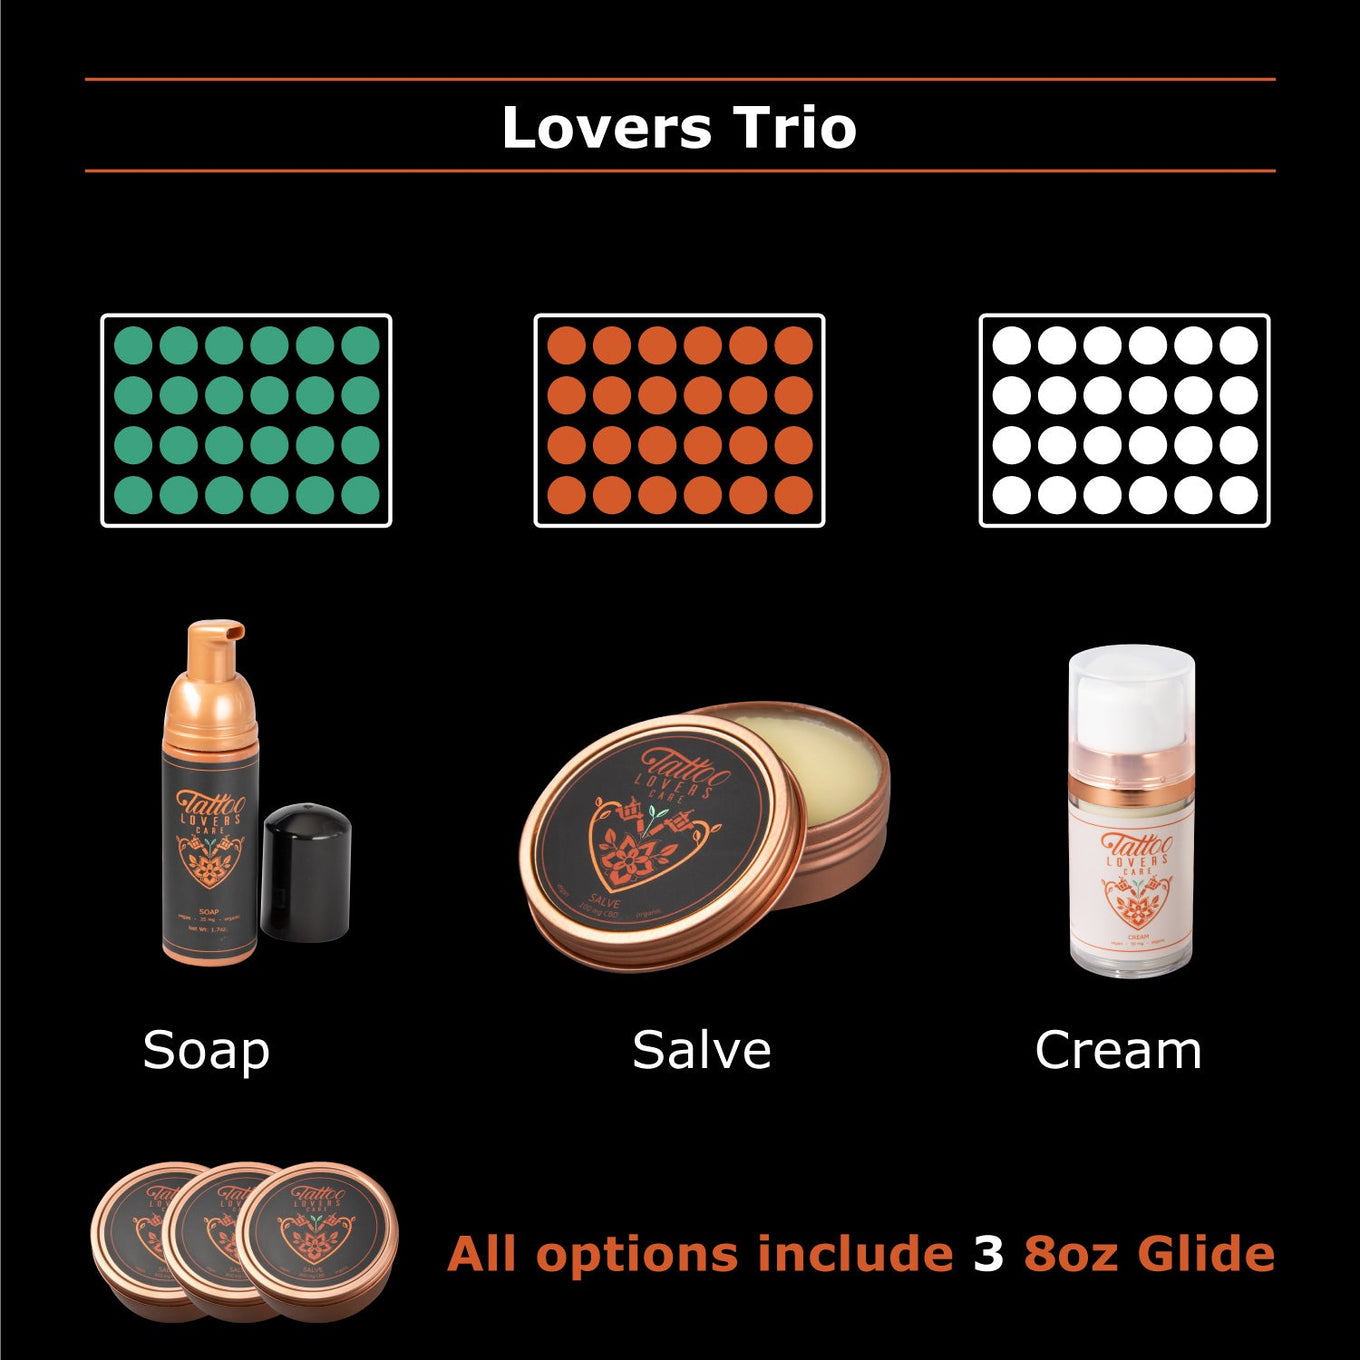 3 Cases - Lovers Trio (Soap, Salve, and Cream)